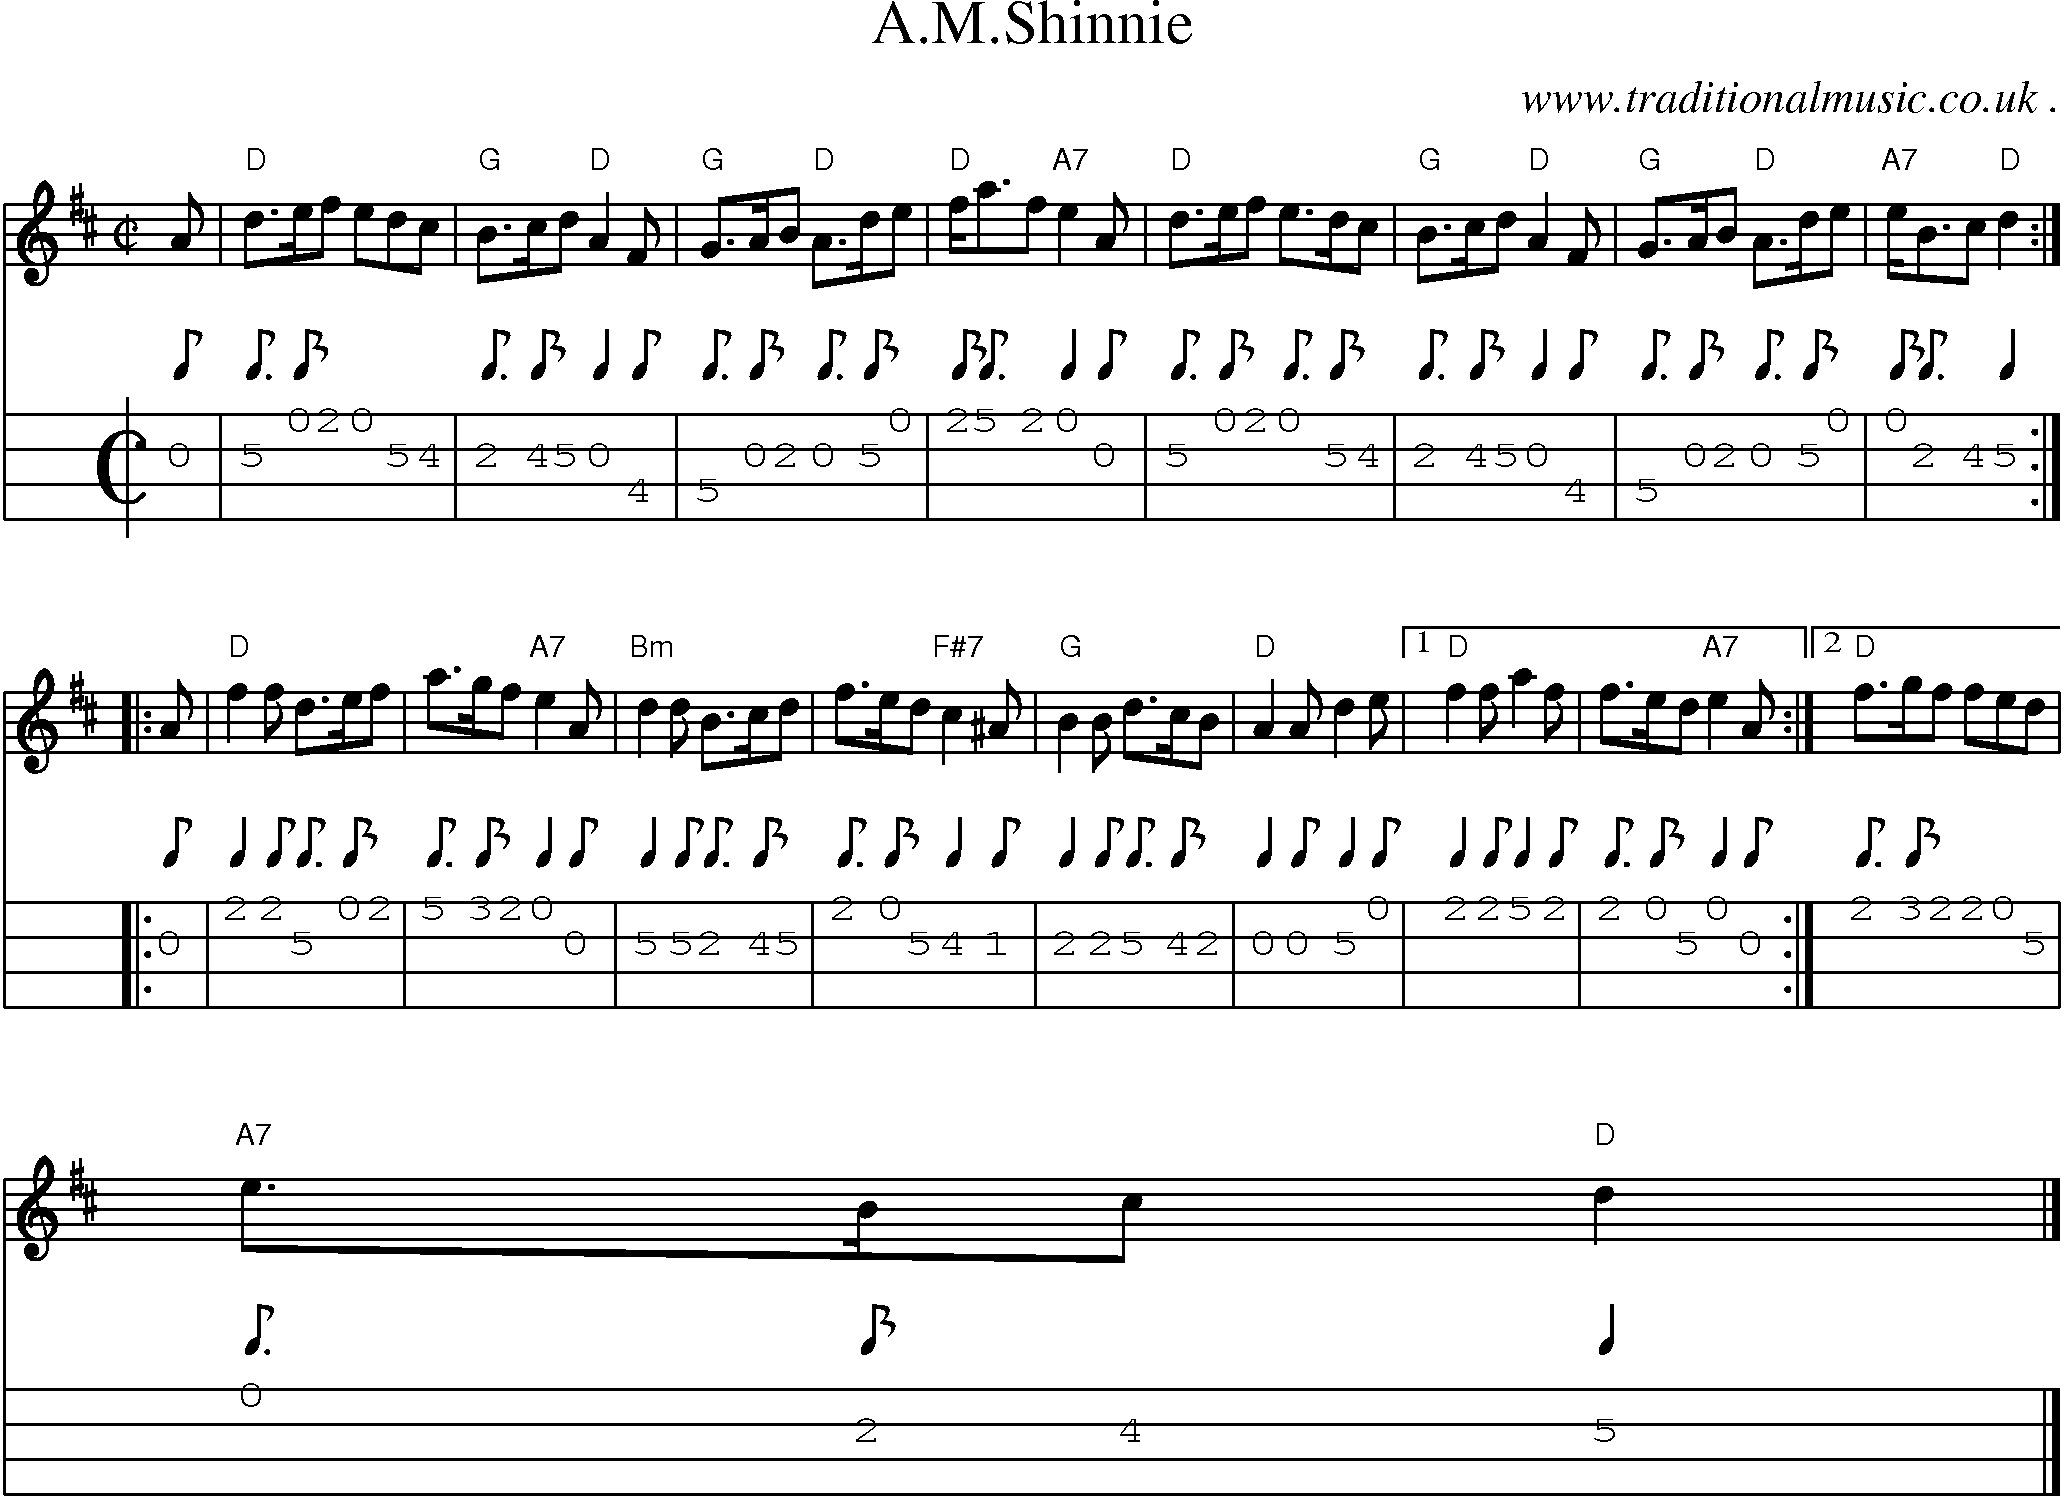 Sheet-music  score, Chords and Mandolin Tabs for Amshinnie